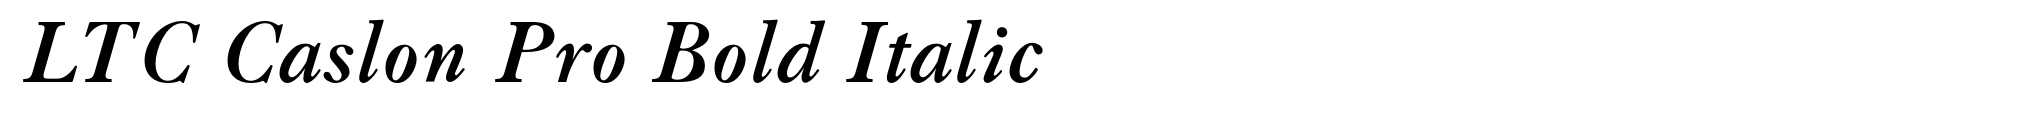 LTC Caslon Pro Bold Italic image